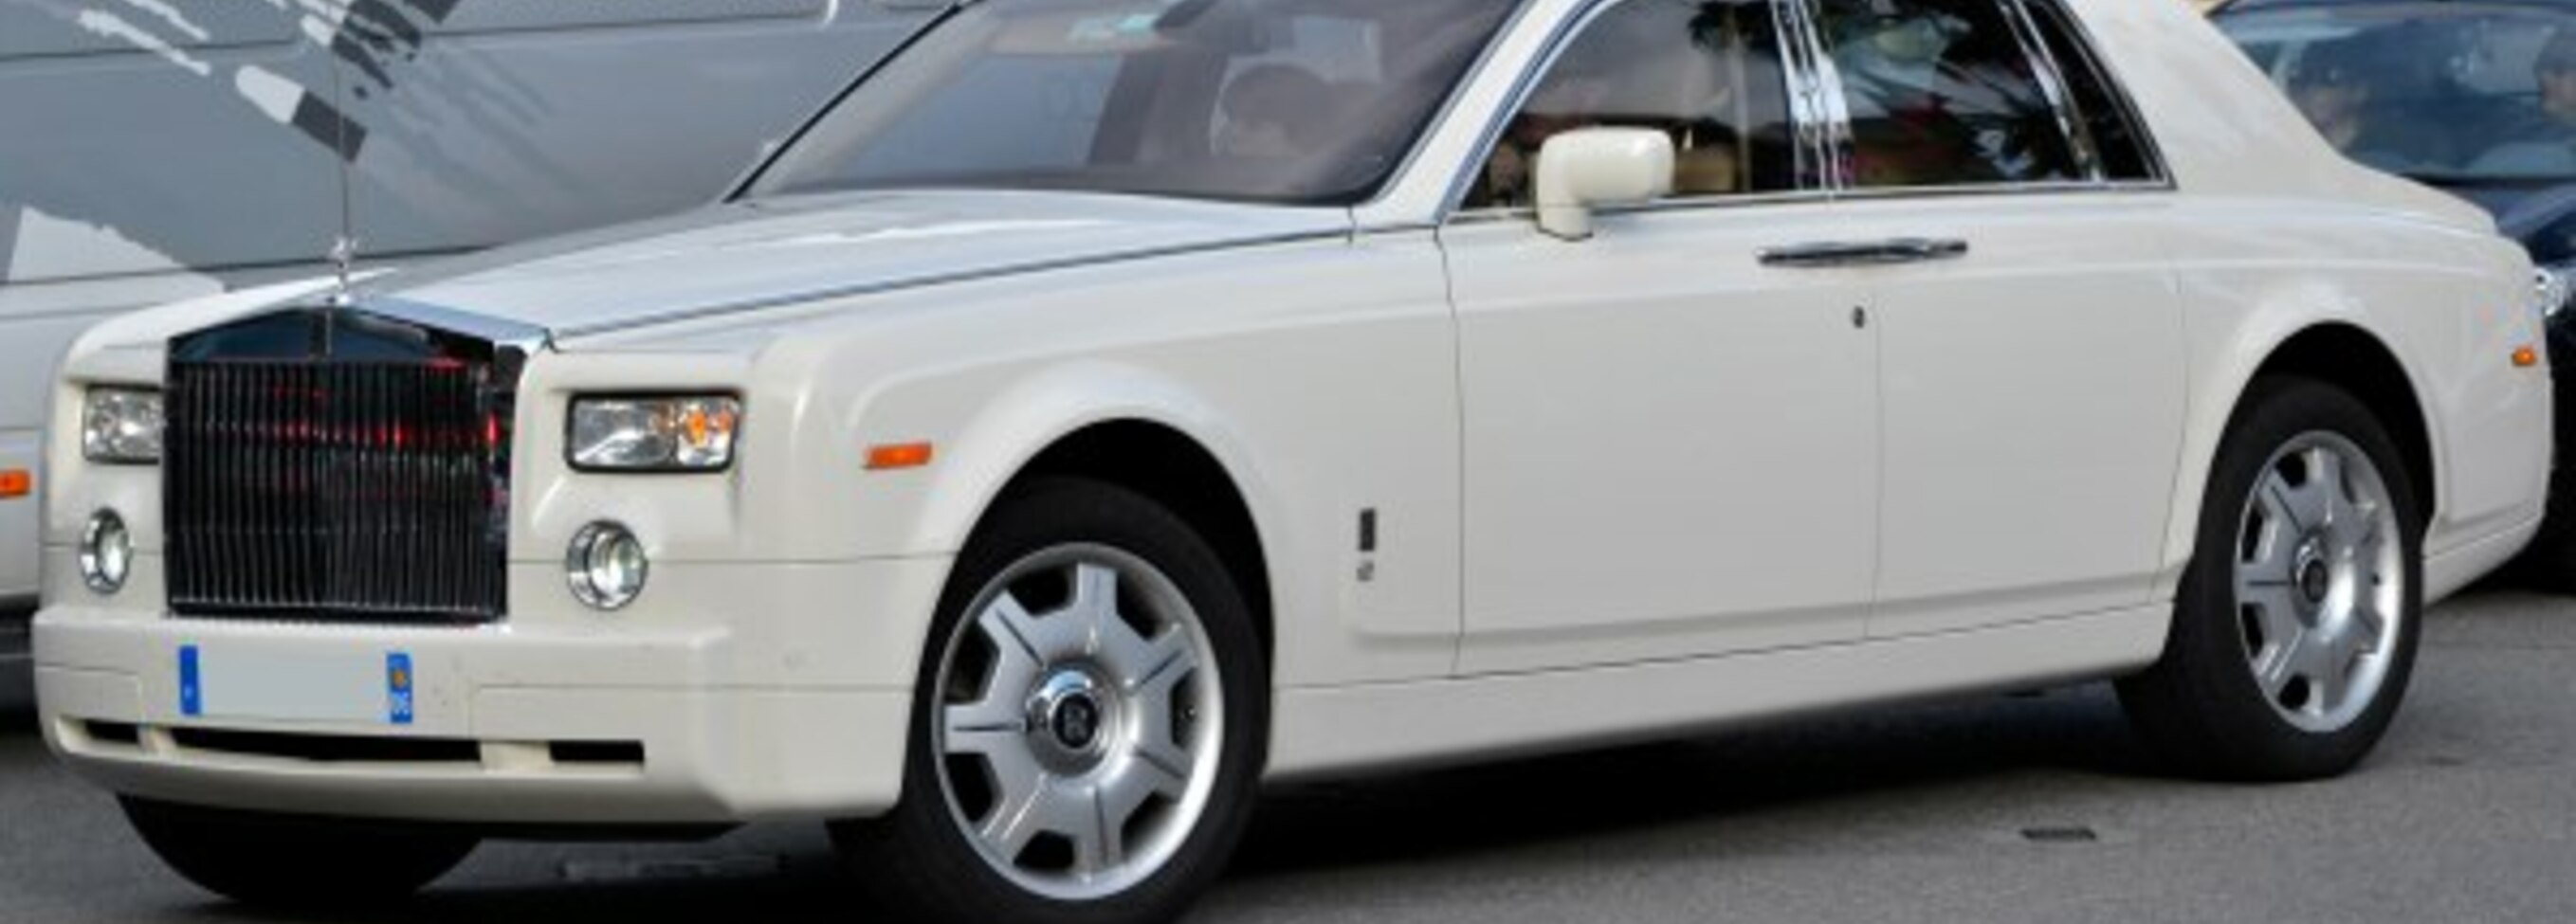 Mua bán RollsRoyce Phantom 2006 giá 8 tỉ 250 triệu  1936066